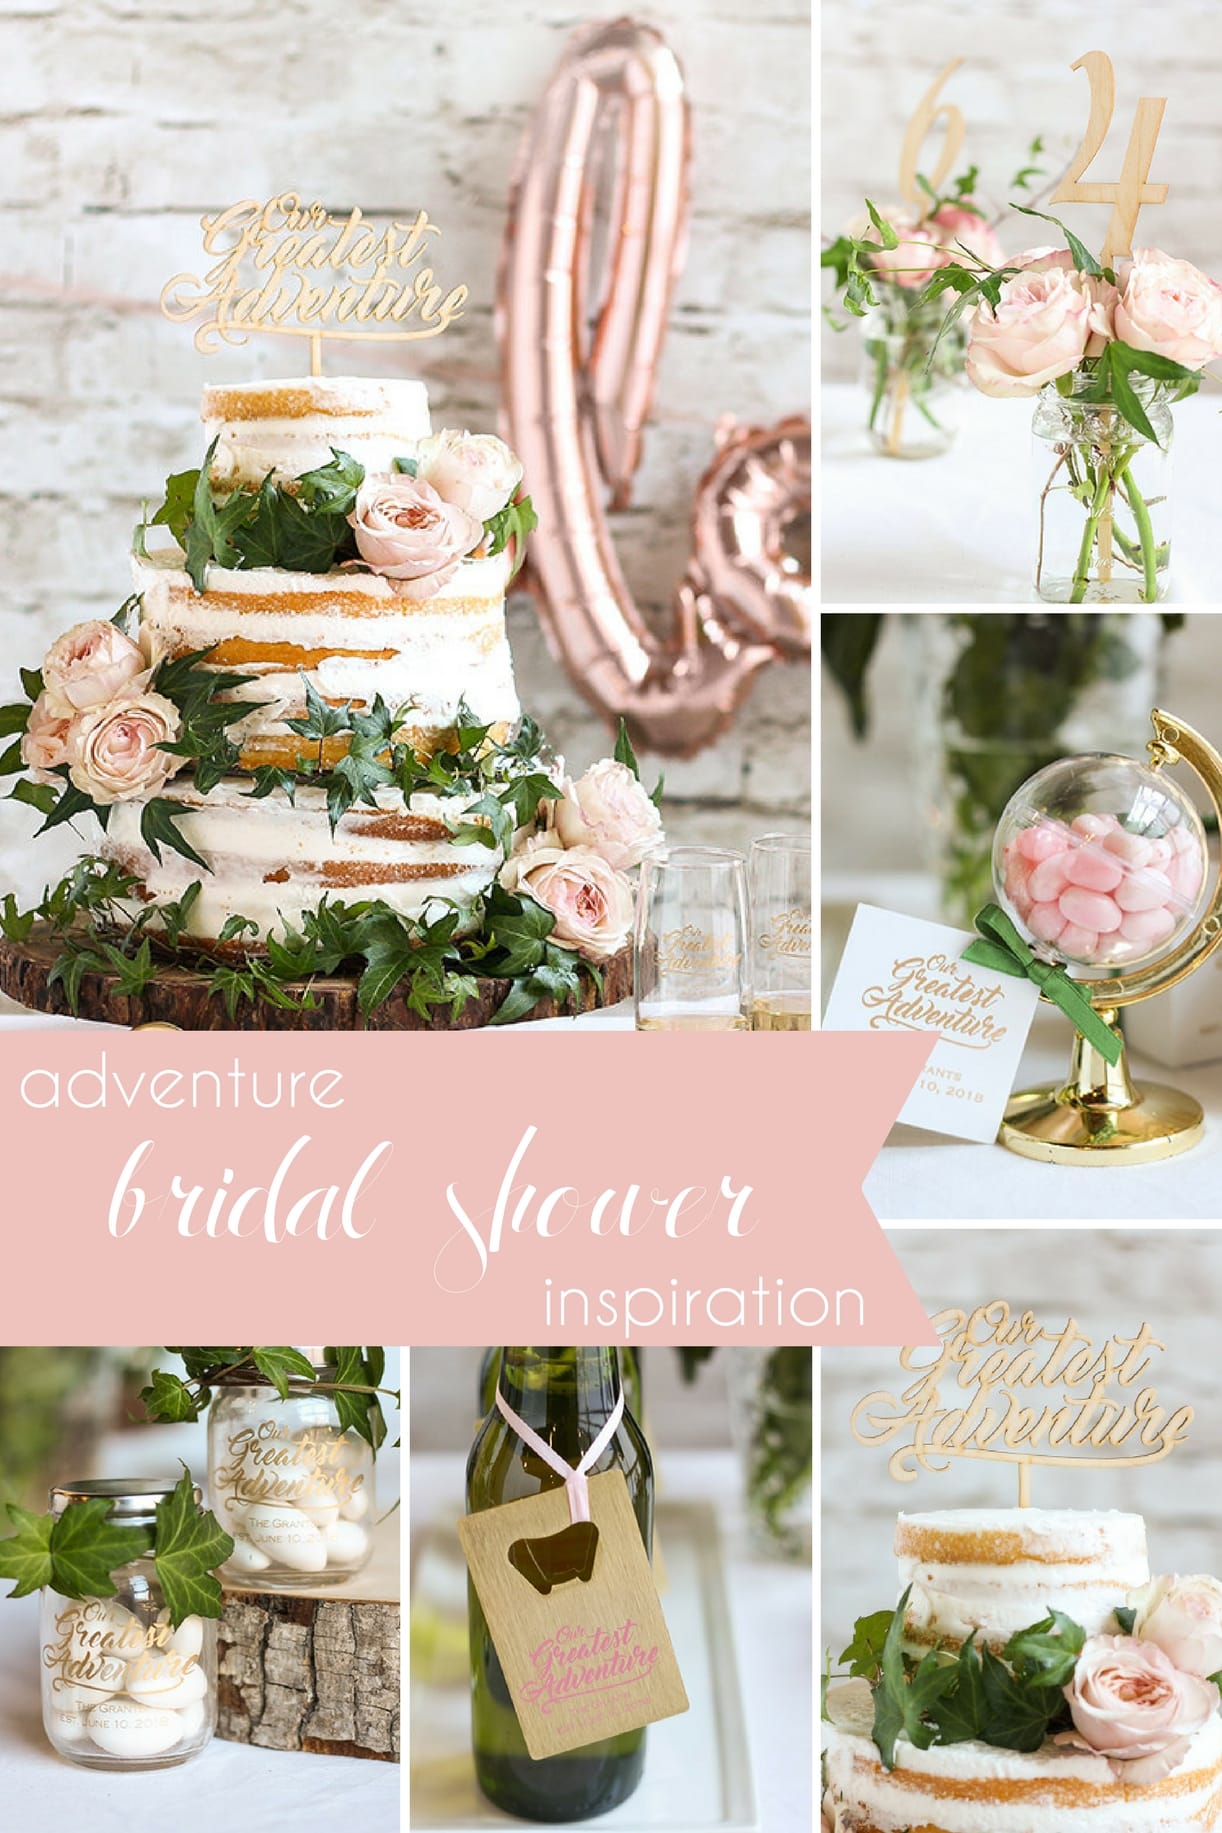 Adventure Bridal Shower Inspiration as seen on Hill City Bride Wedding Blog - blush, cake topper, favors